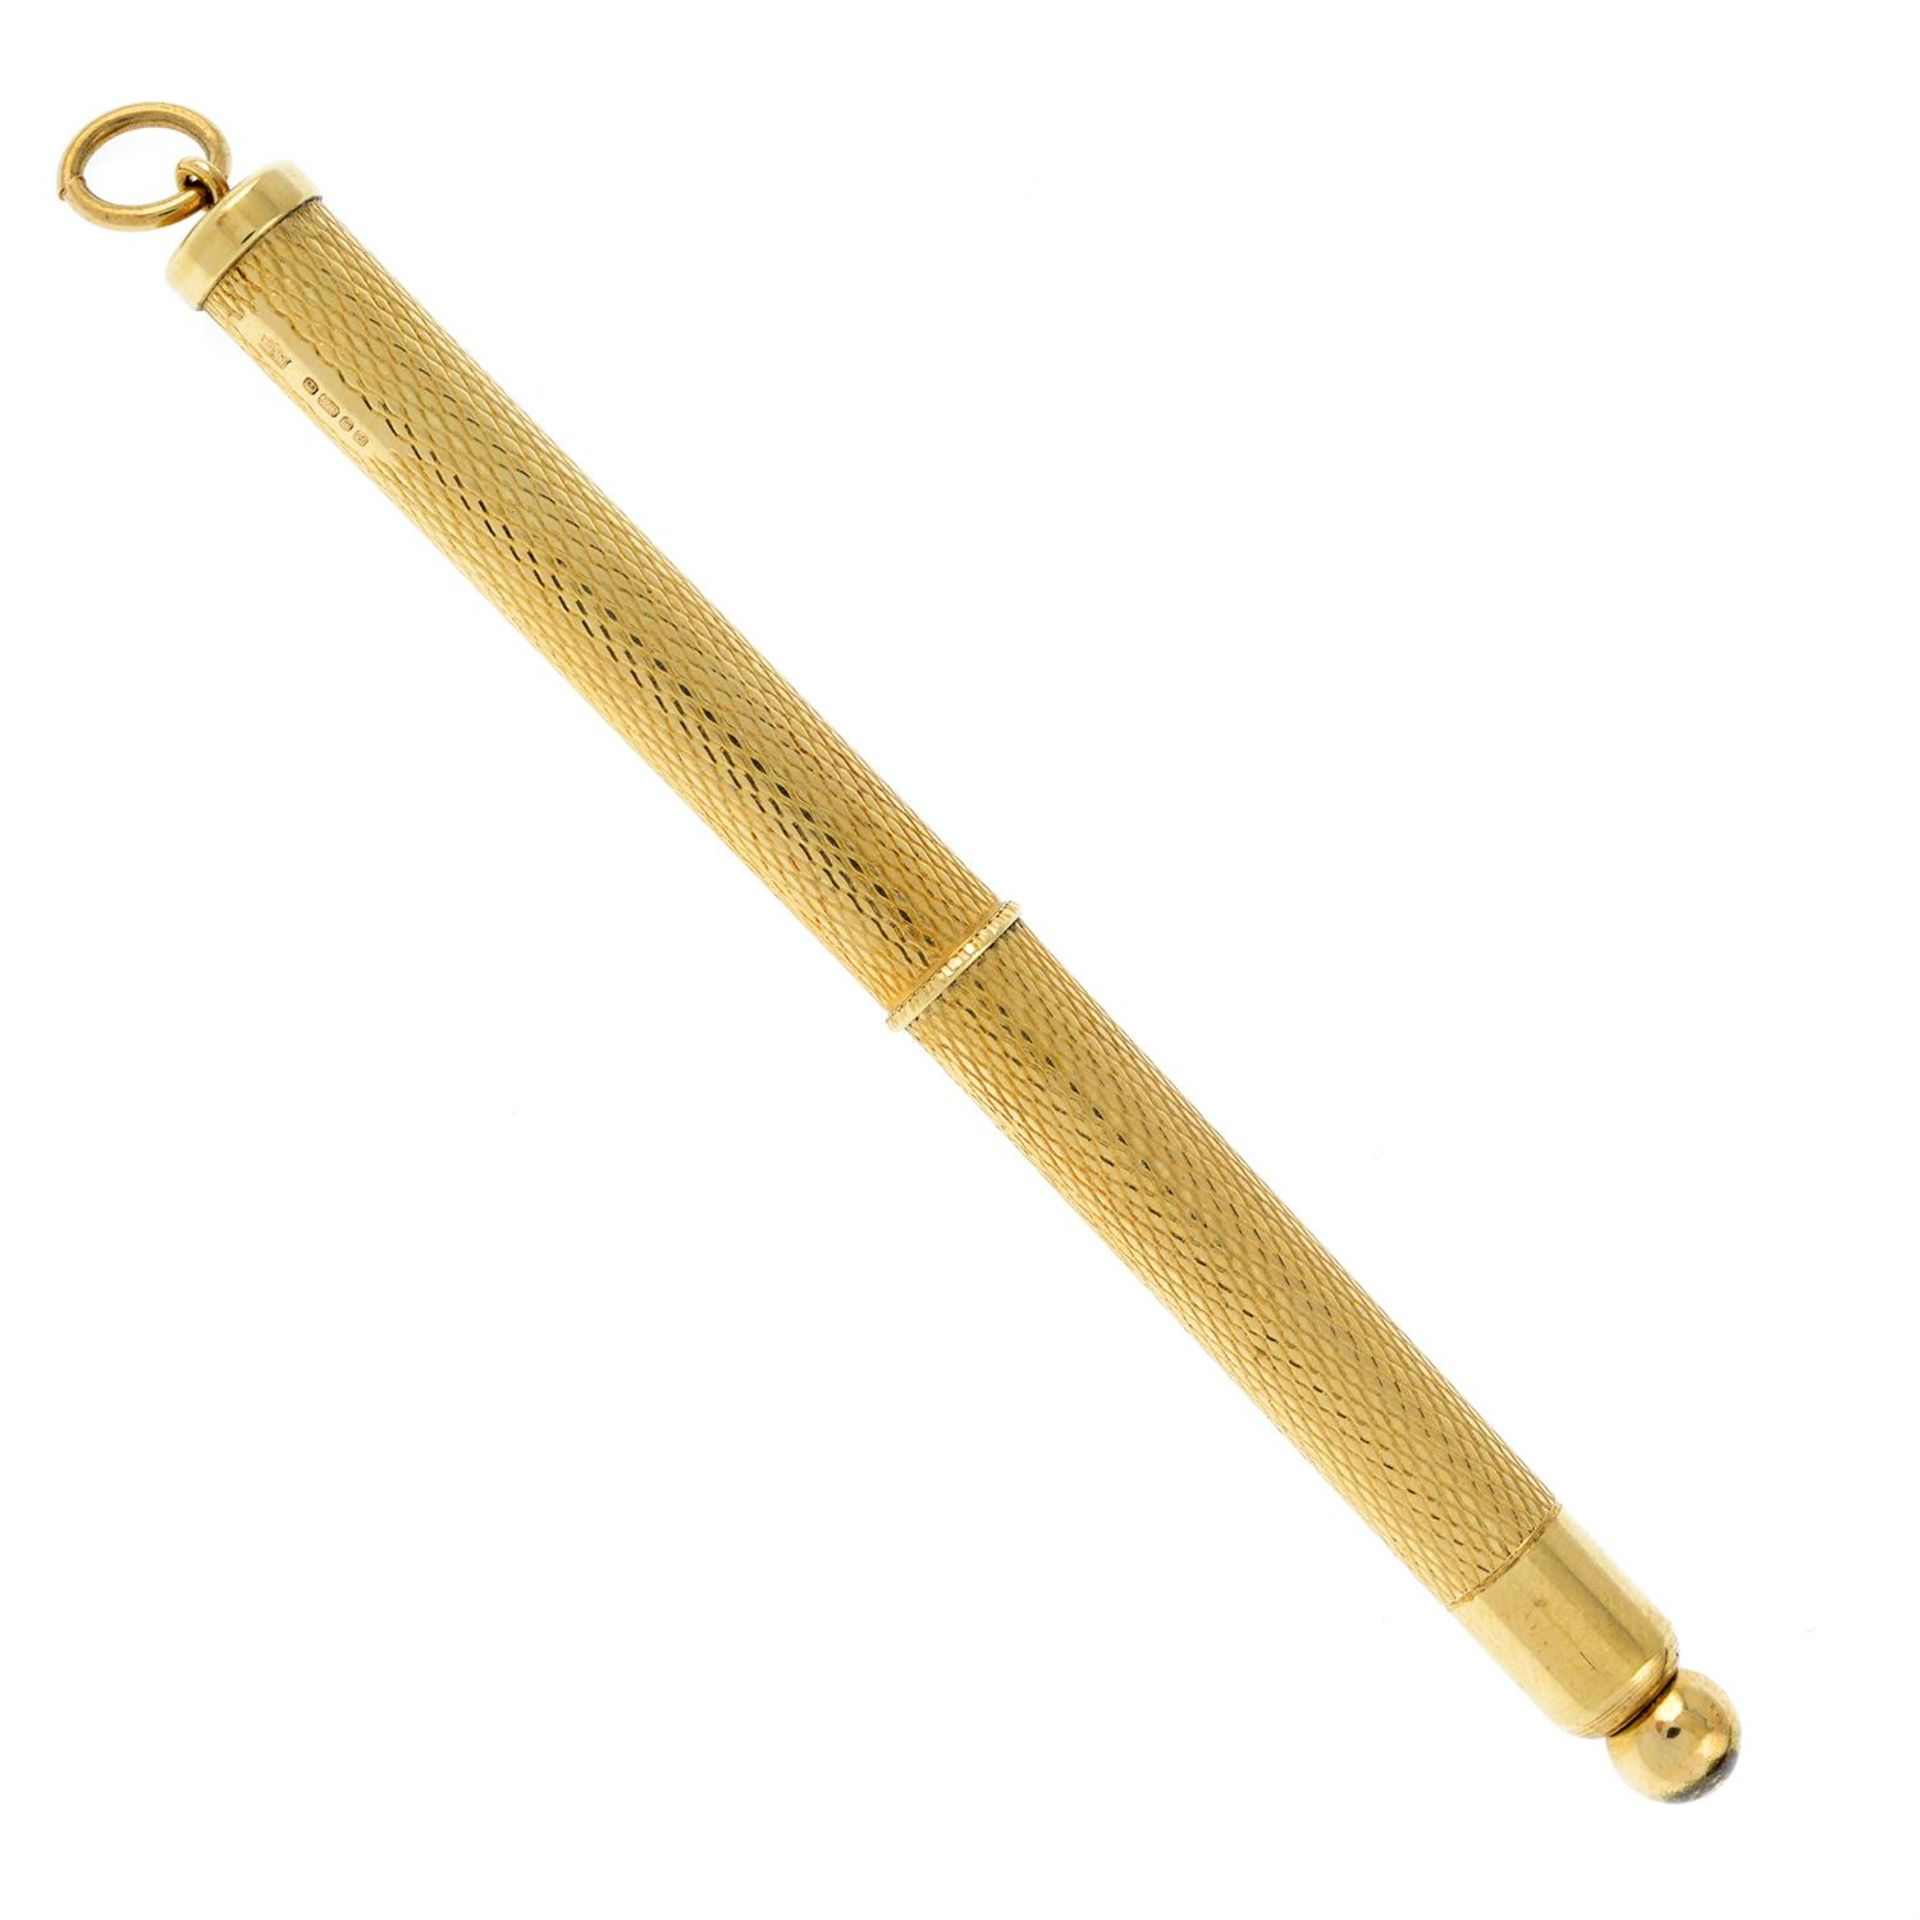 A 9ct gold swizzle stick.